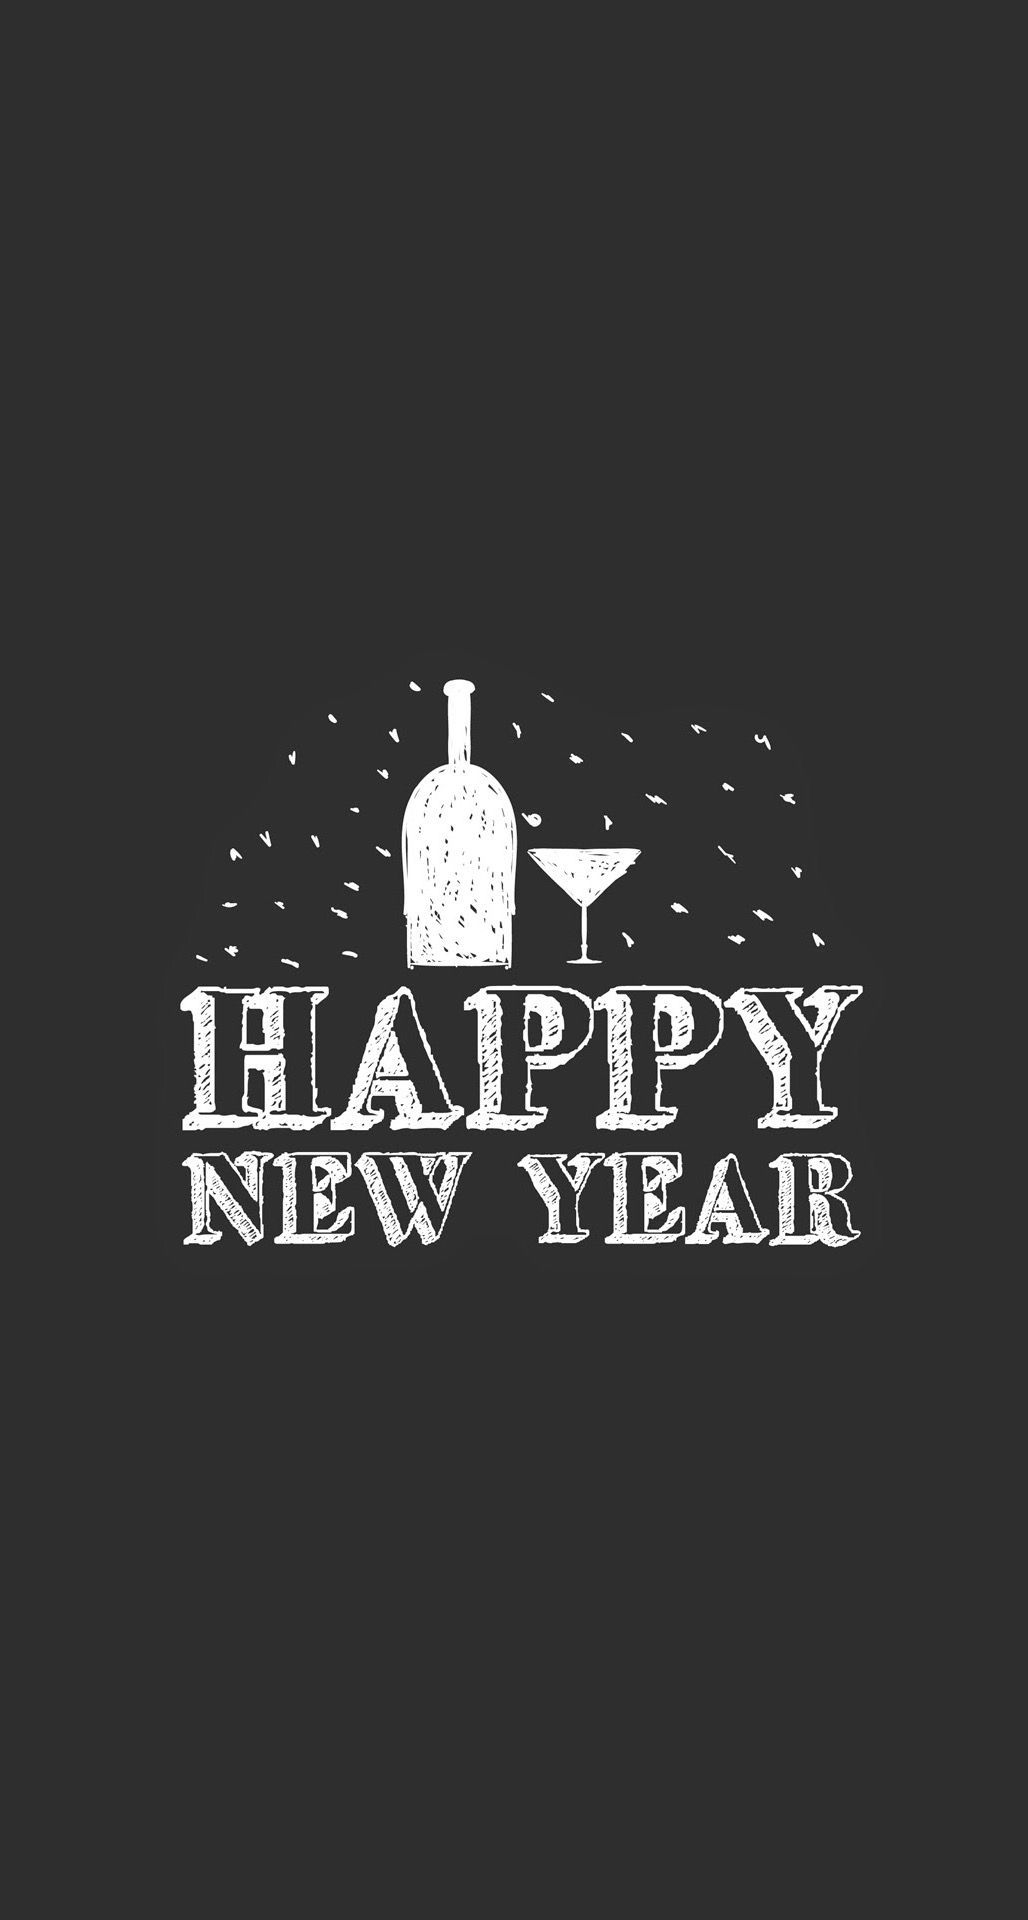 Happy New Year Drinks Minimal iPhone 6 Plus HD Wallpaper. Happy new year wallpaper, New year's drinks, New year wallpaper